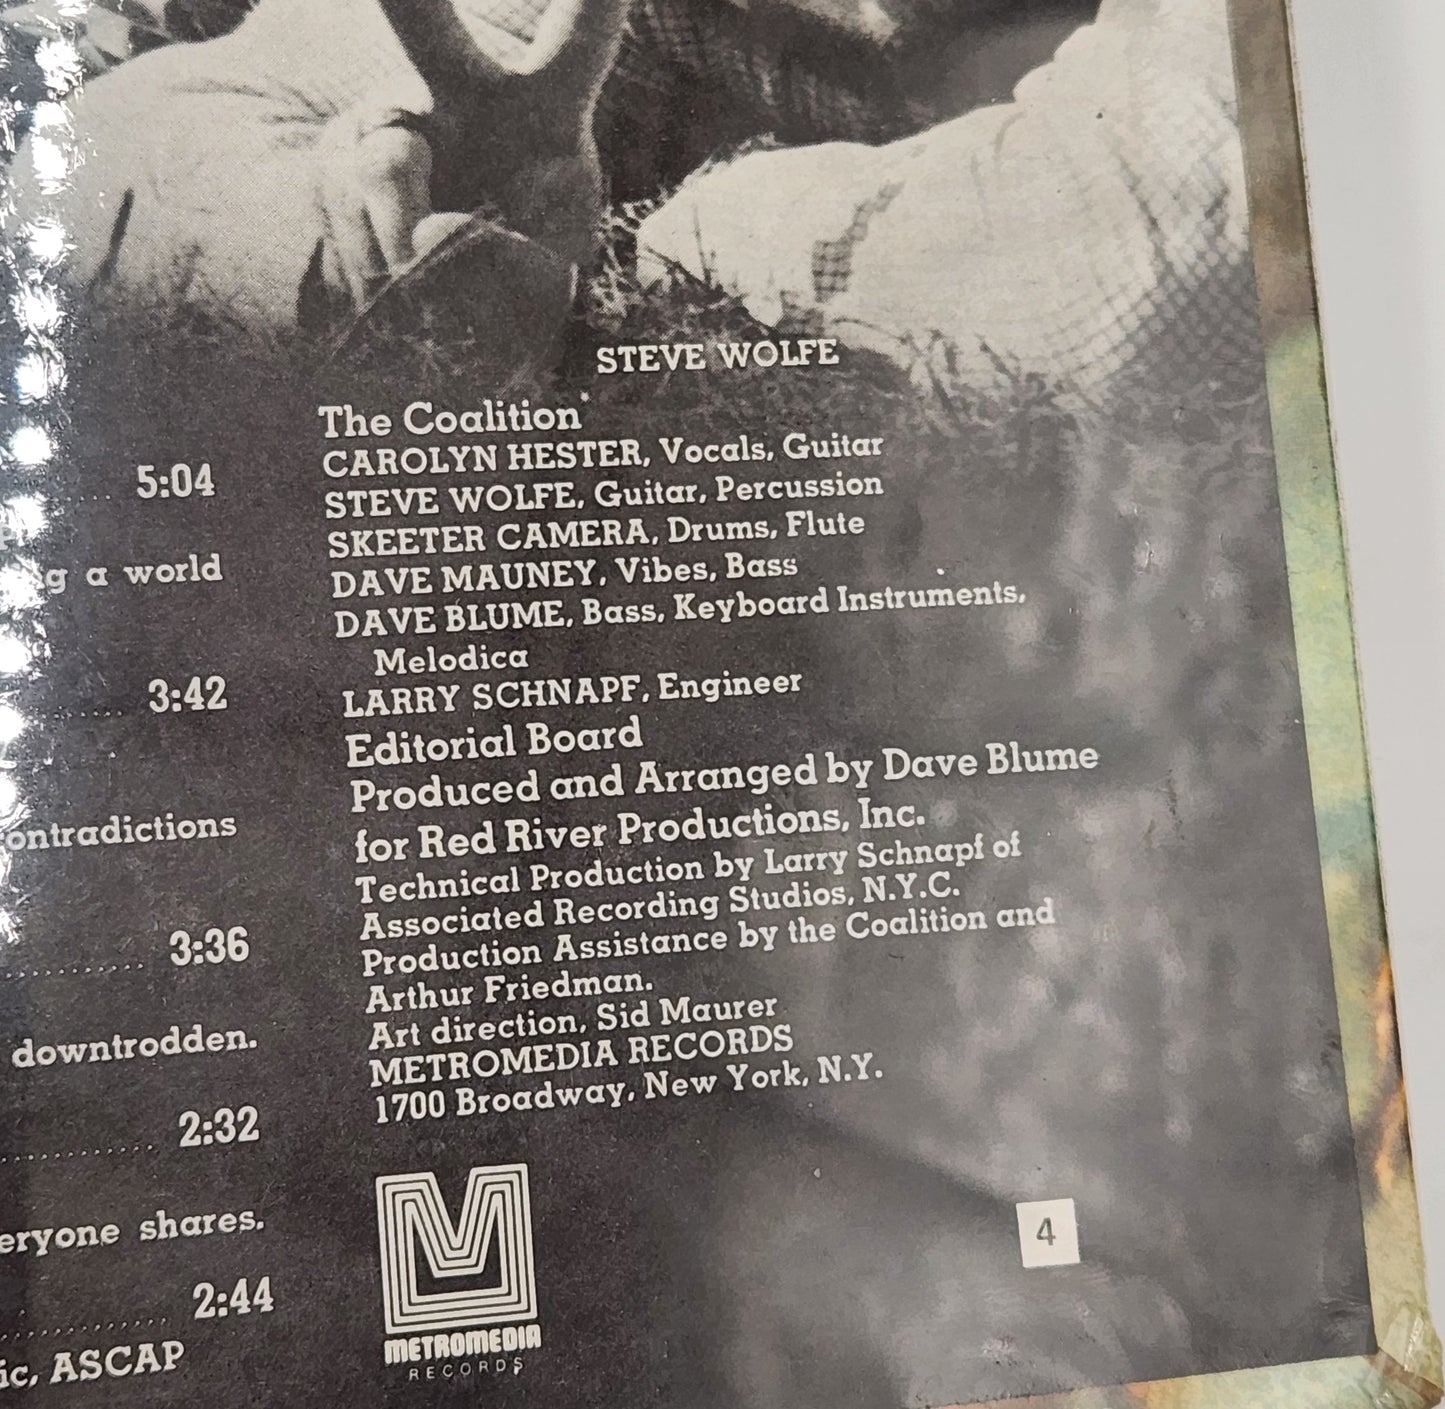 Sealed The Carolyn Hester Coalition "Magazine" 1970 Folk Rock Record Album